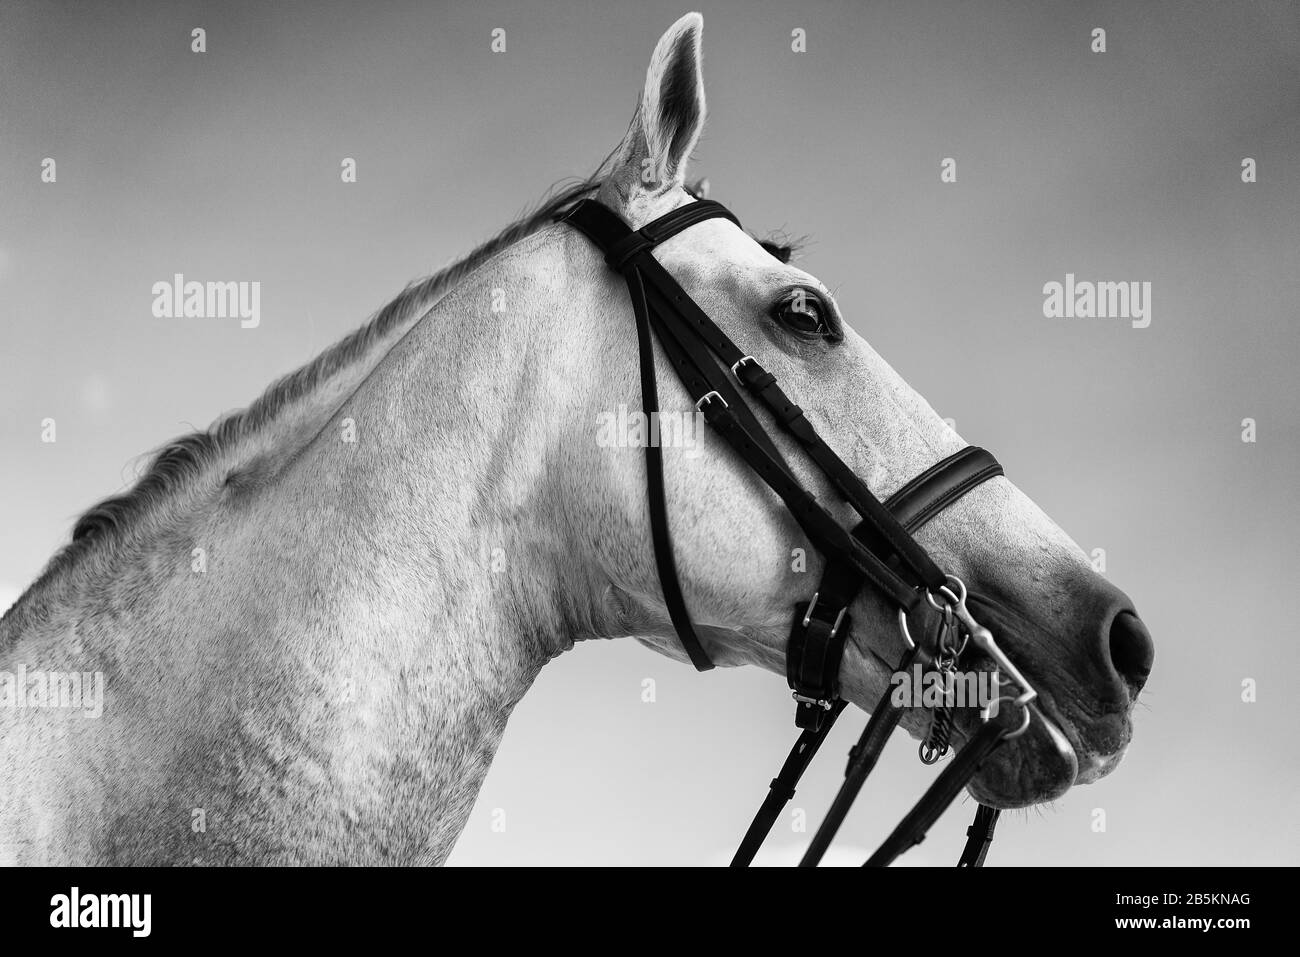 Black and white horse equestrian portratit, equine world. Stock Photo